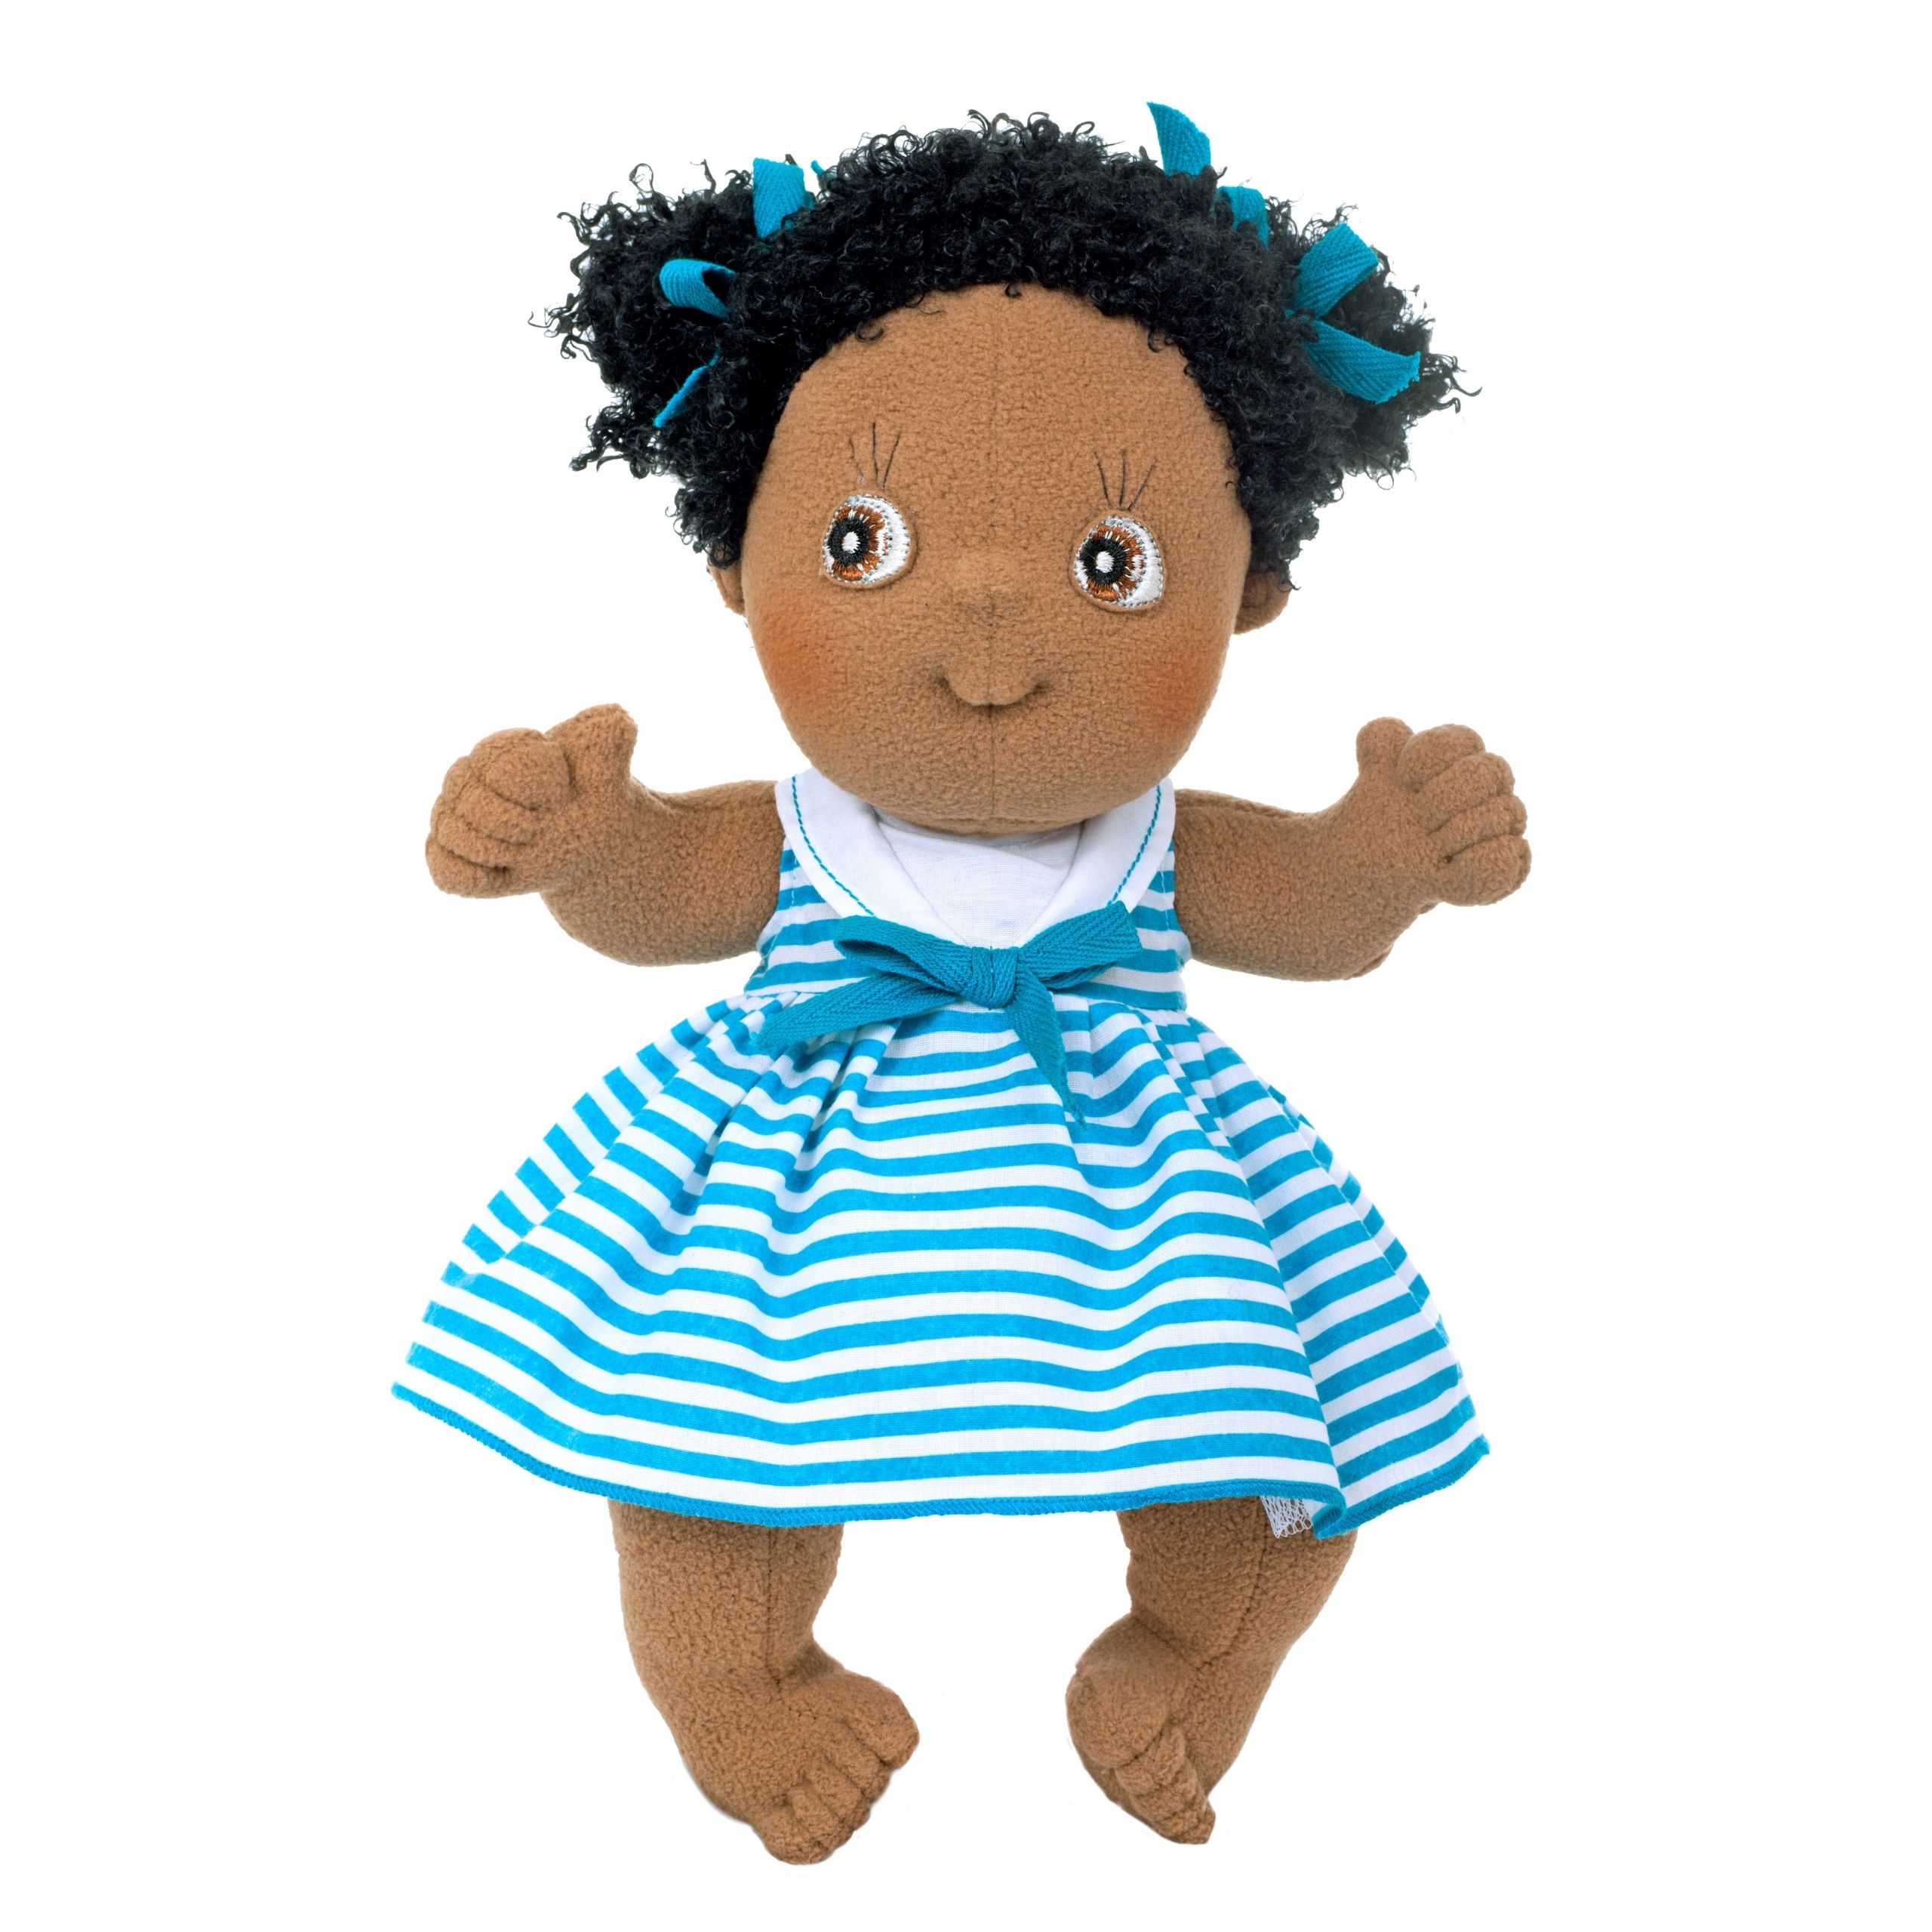 Dark-skinned dolls rubens barn soft doll jennifer cutie classic